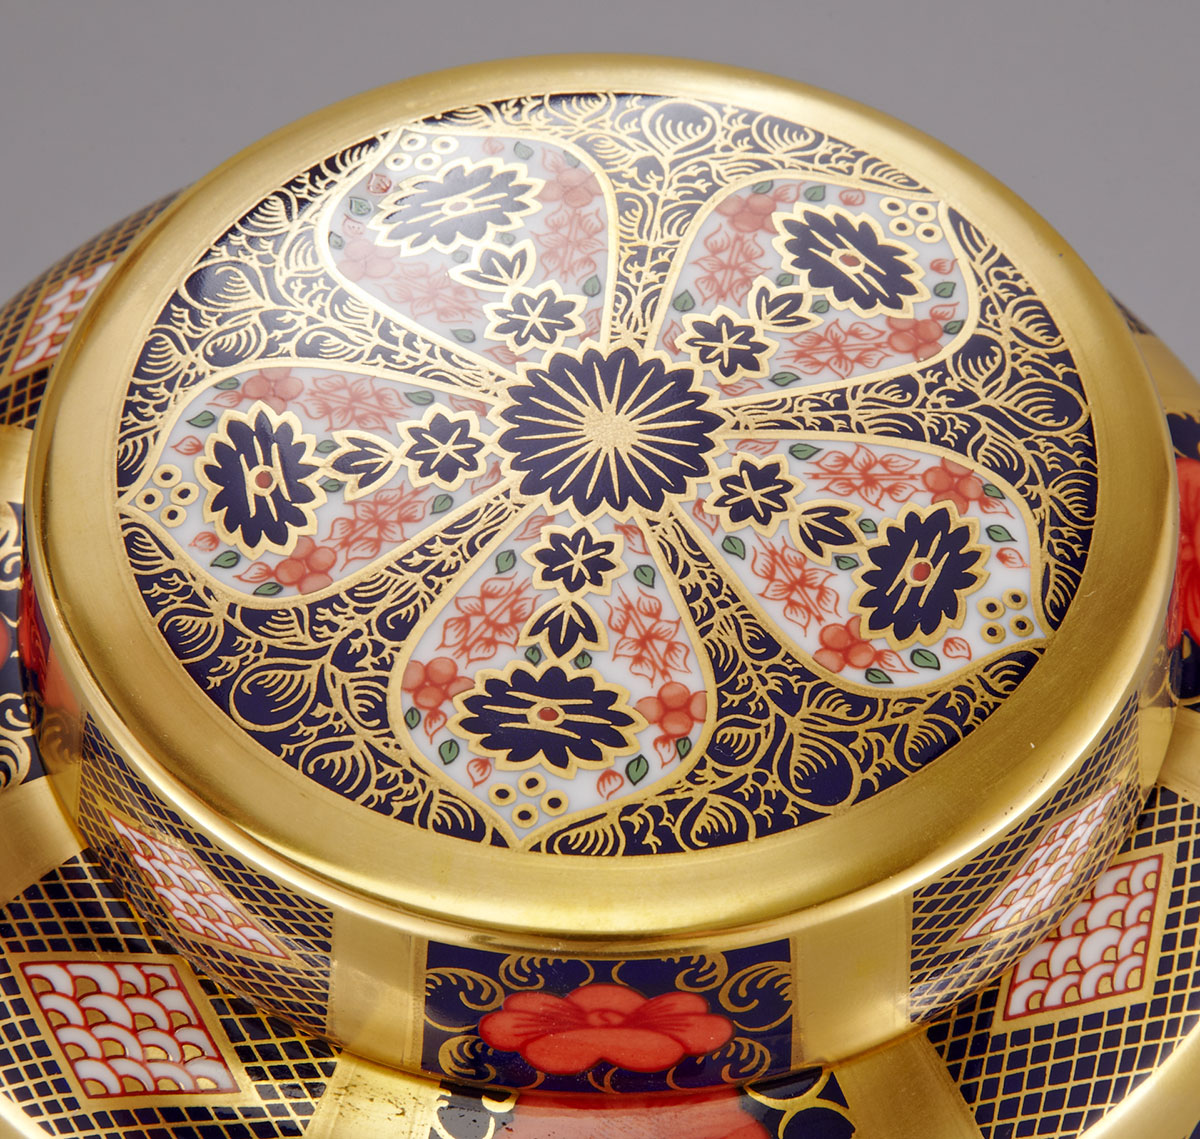 Royal Crown Derby ‘Old Imari’ (1128) Pattern Covered Jar, 1989